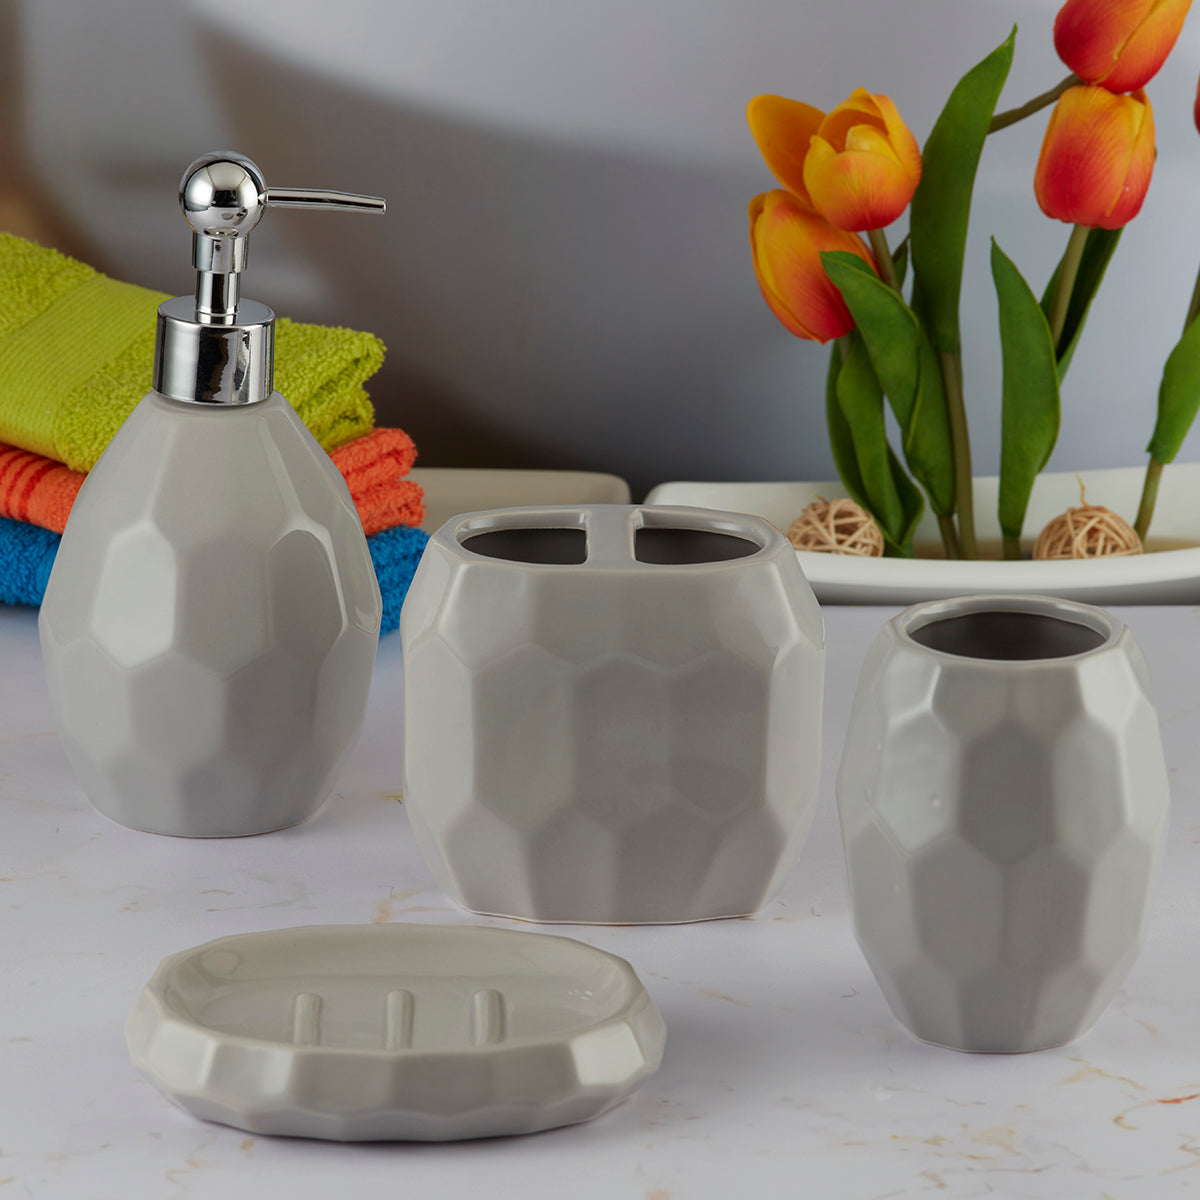 Ceramic Bathroom Accessories Set of 4 Bath Set with Soap Dispenser (5759)